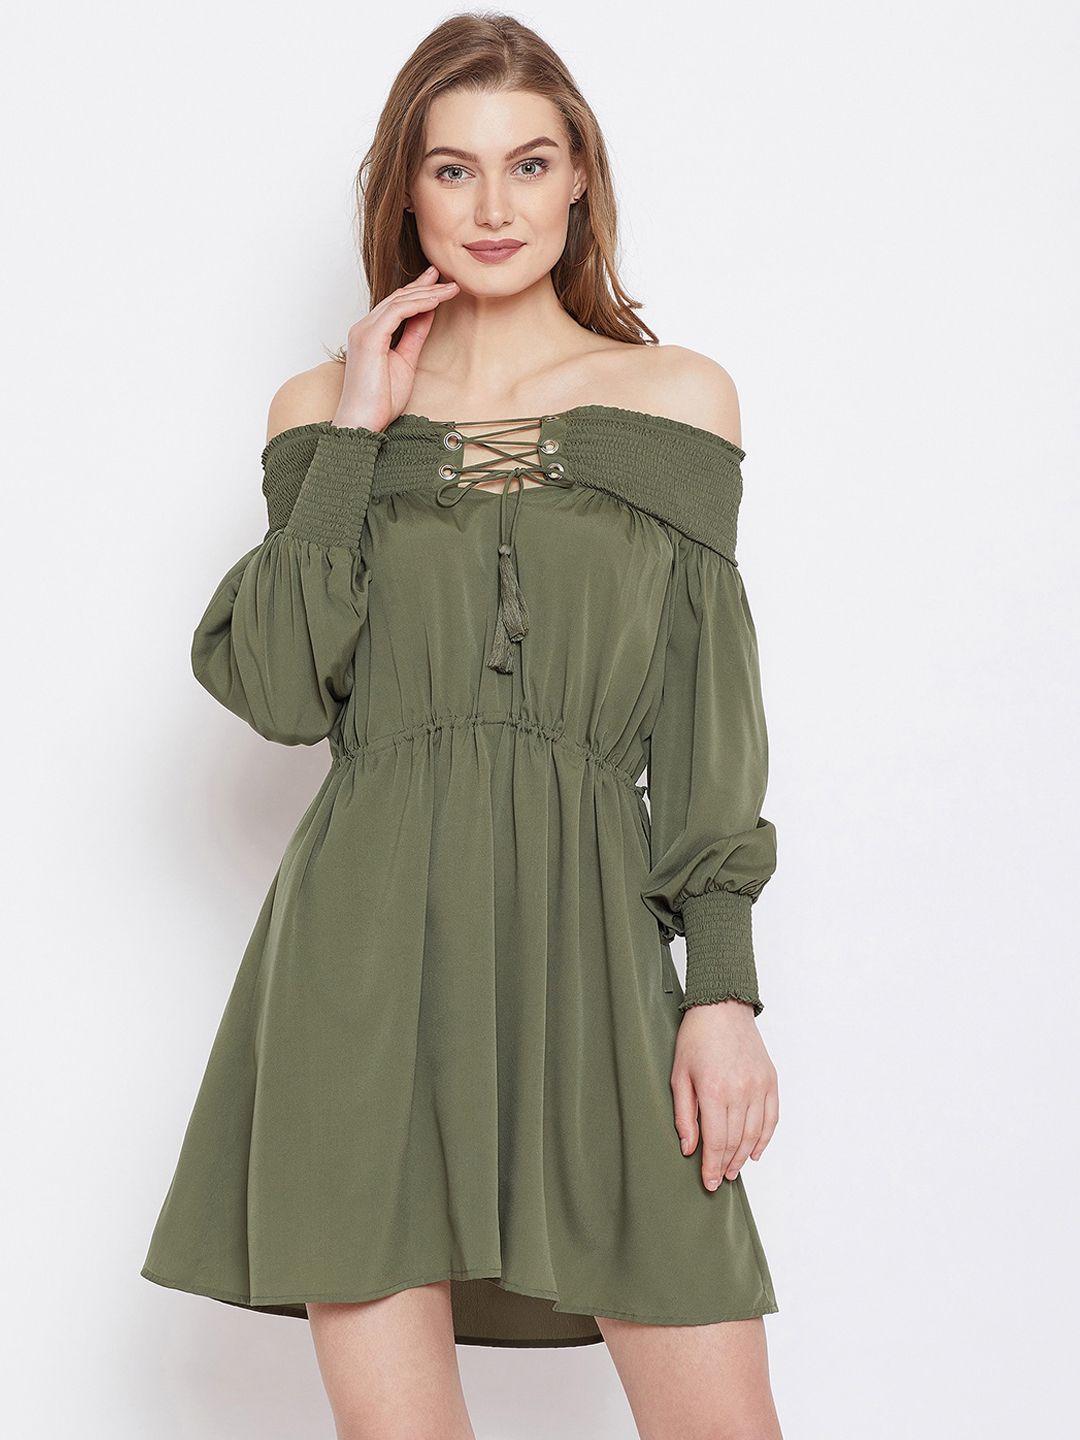 panit olive green off-shoulder crepe drop-waist mini dress